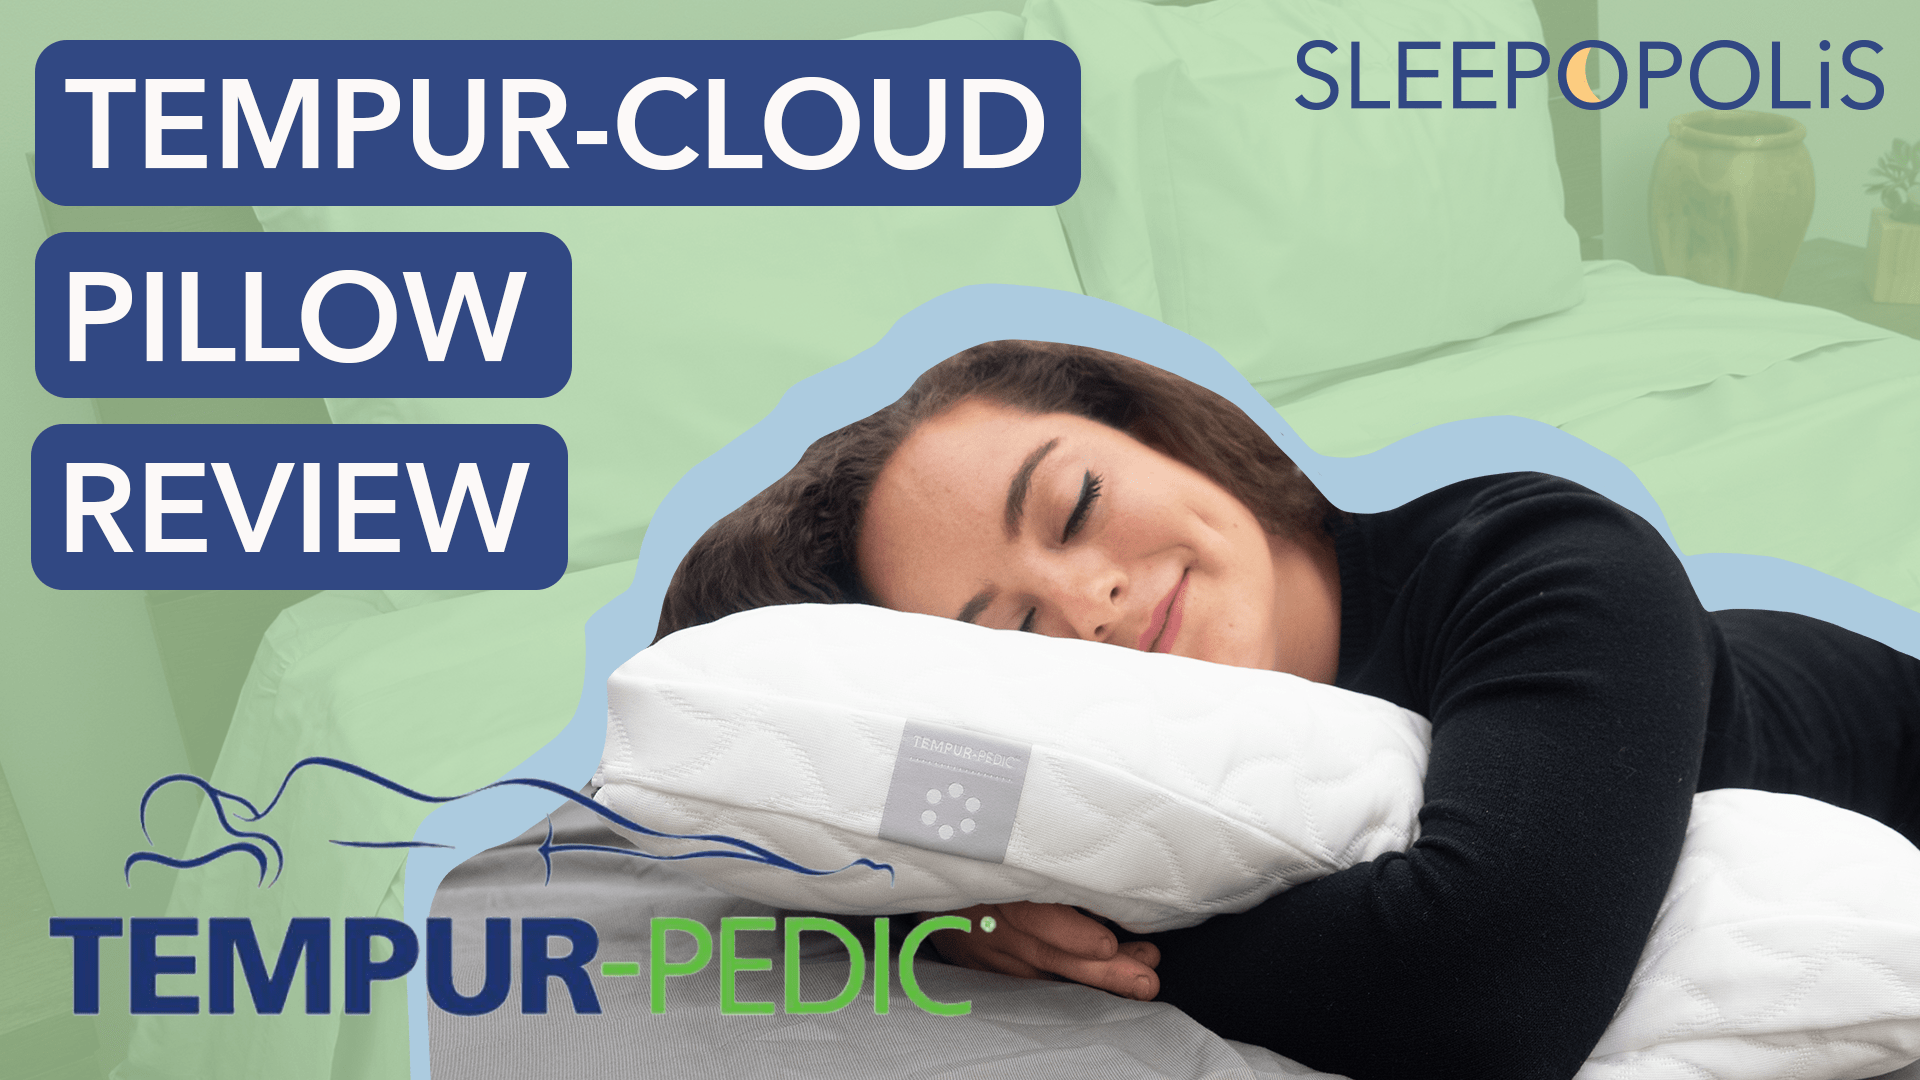 Tempur-Cloud Pillow Review (2020 